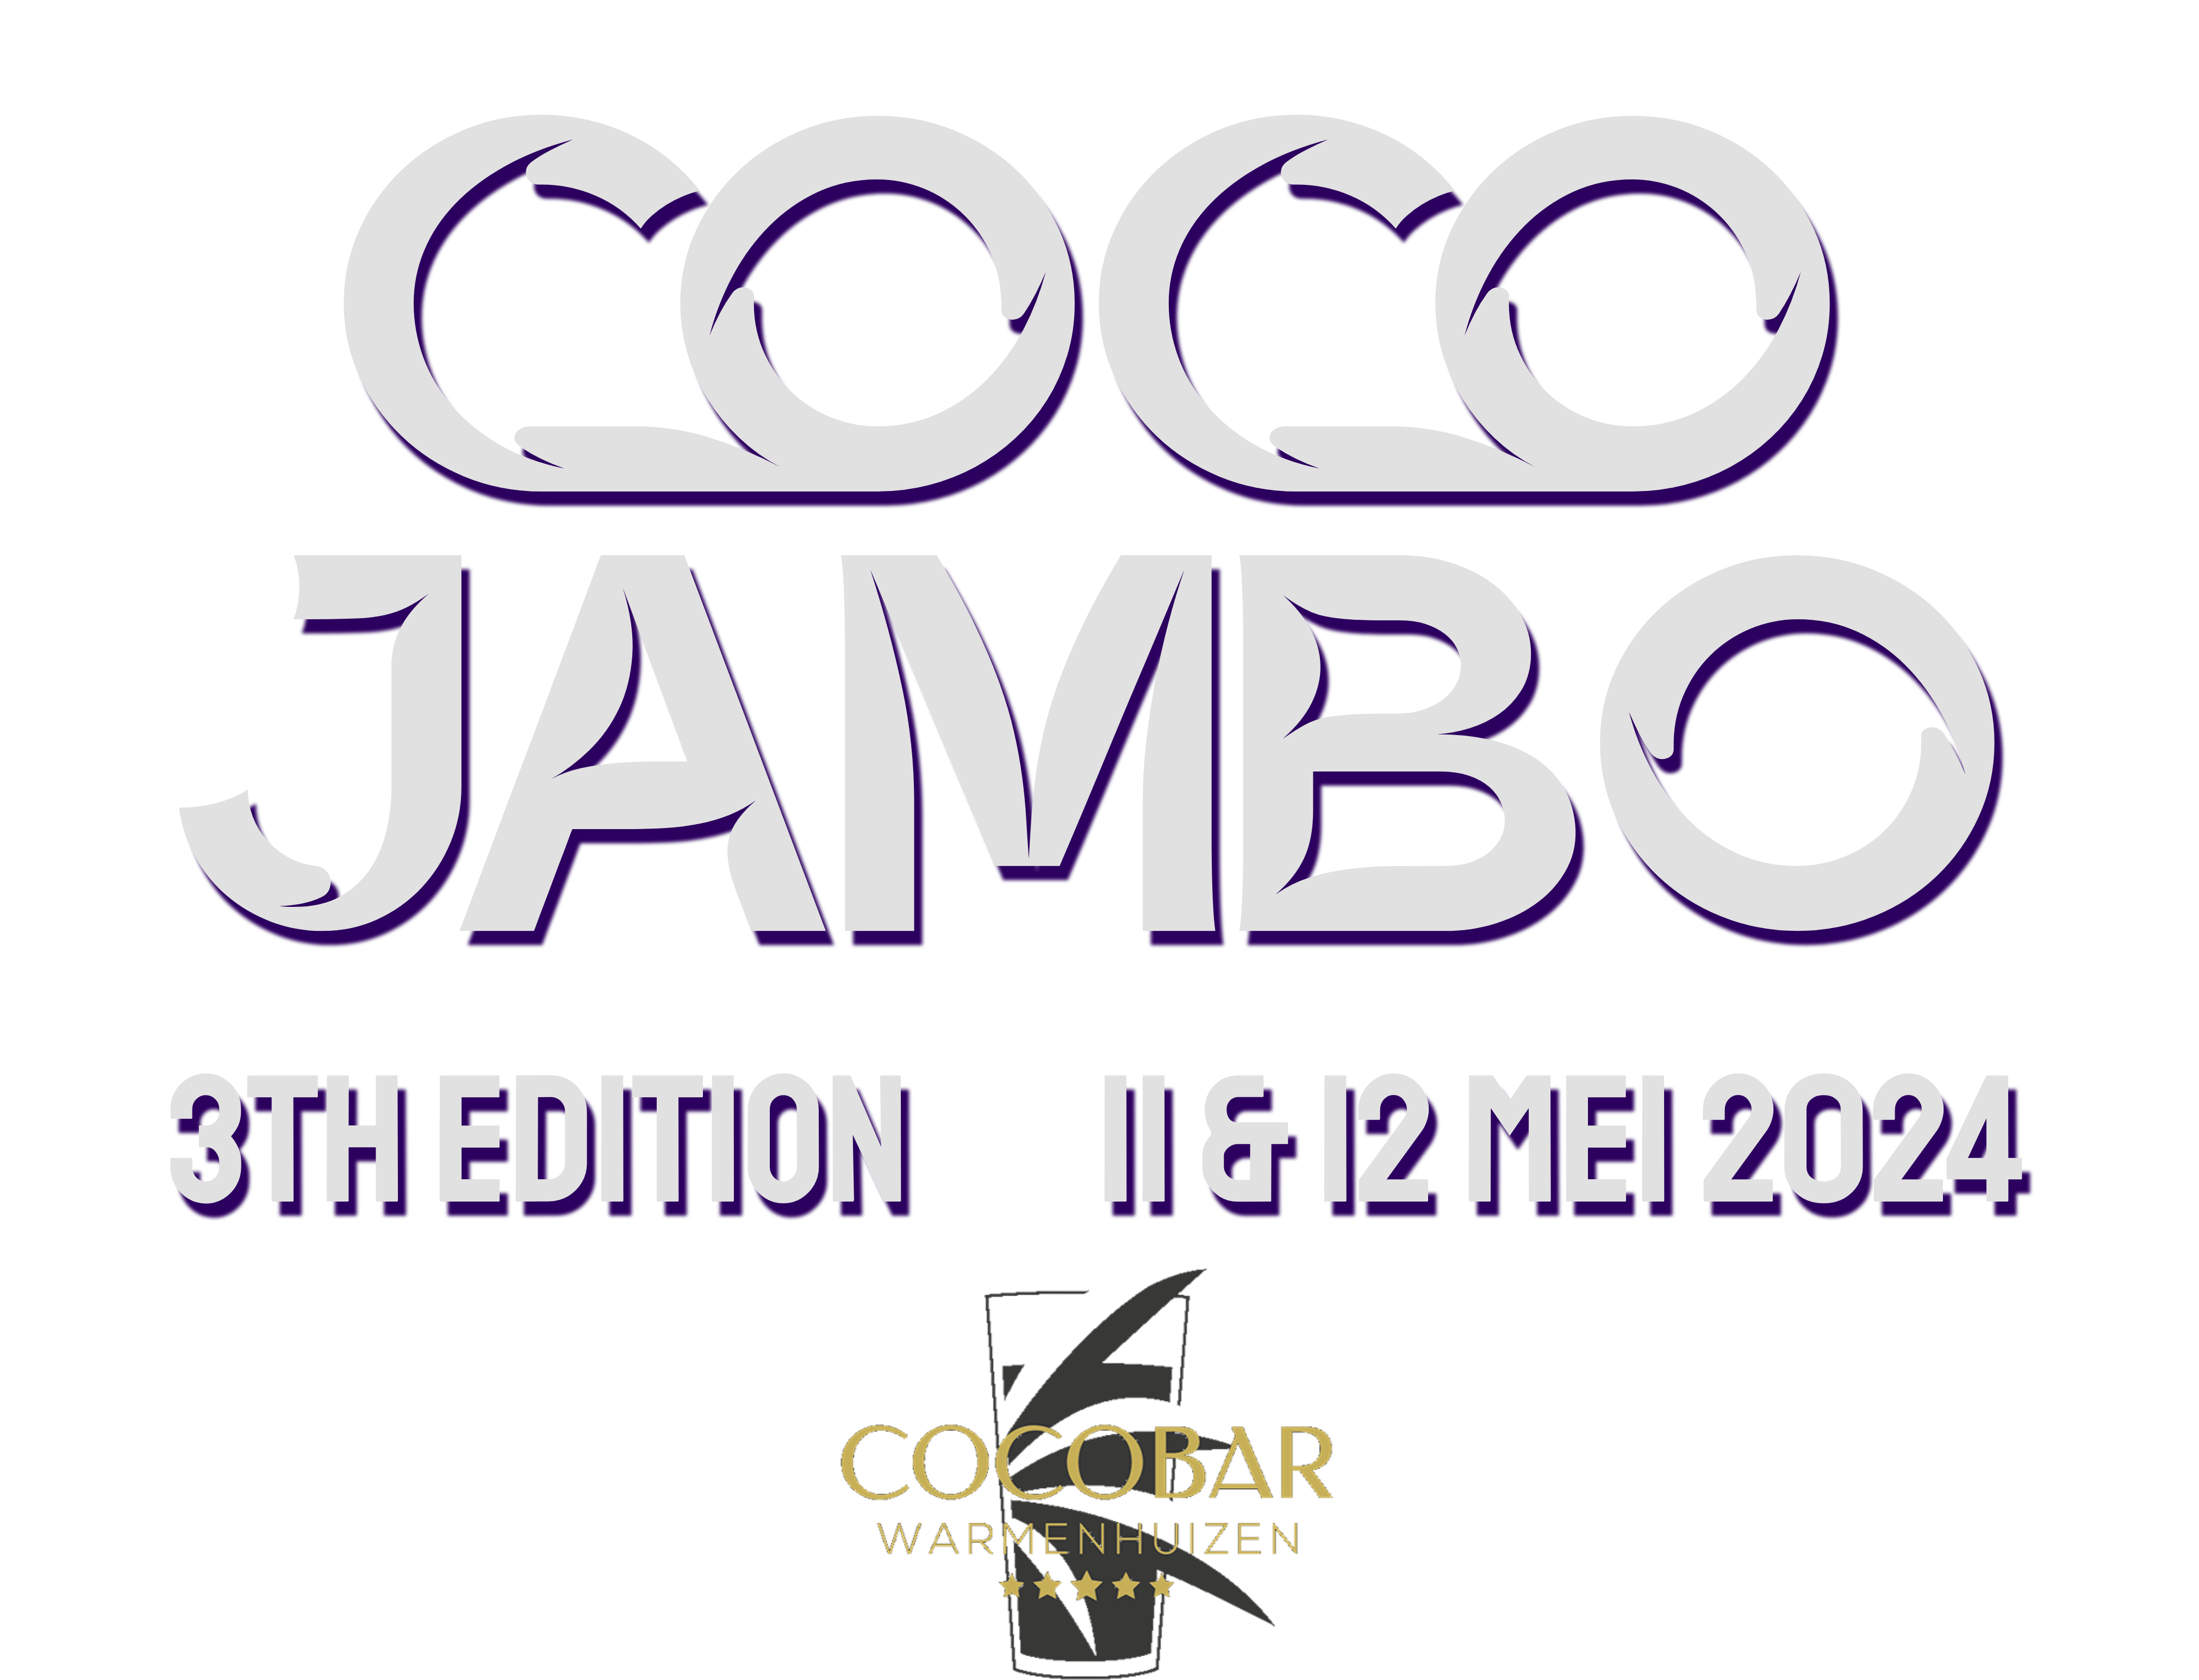 Coco Jambo logo 2024